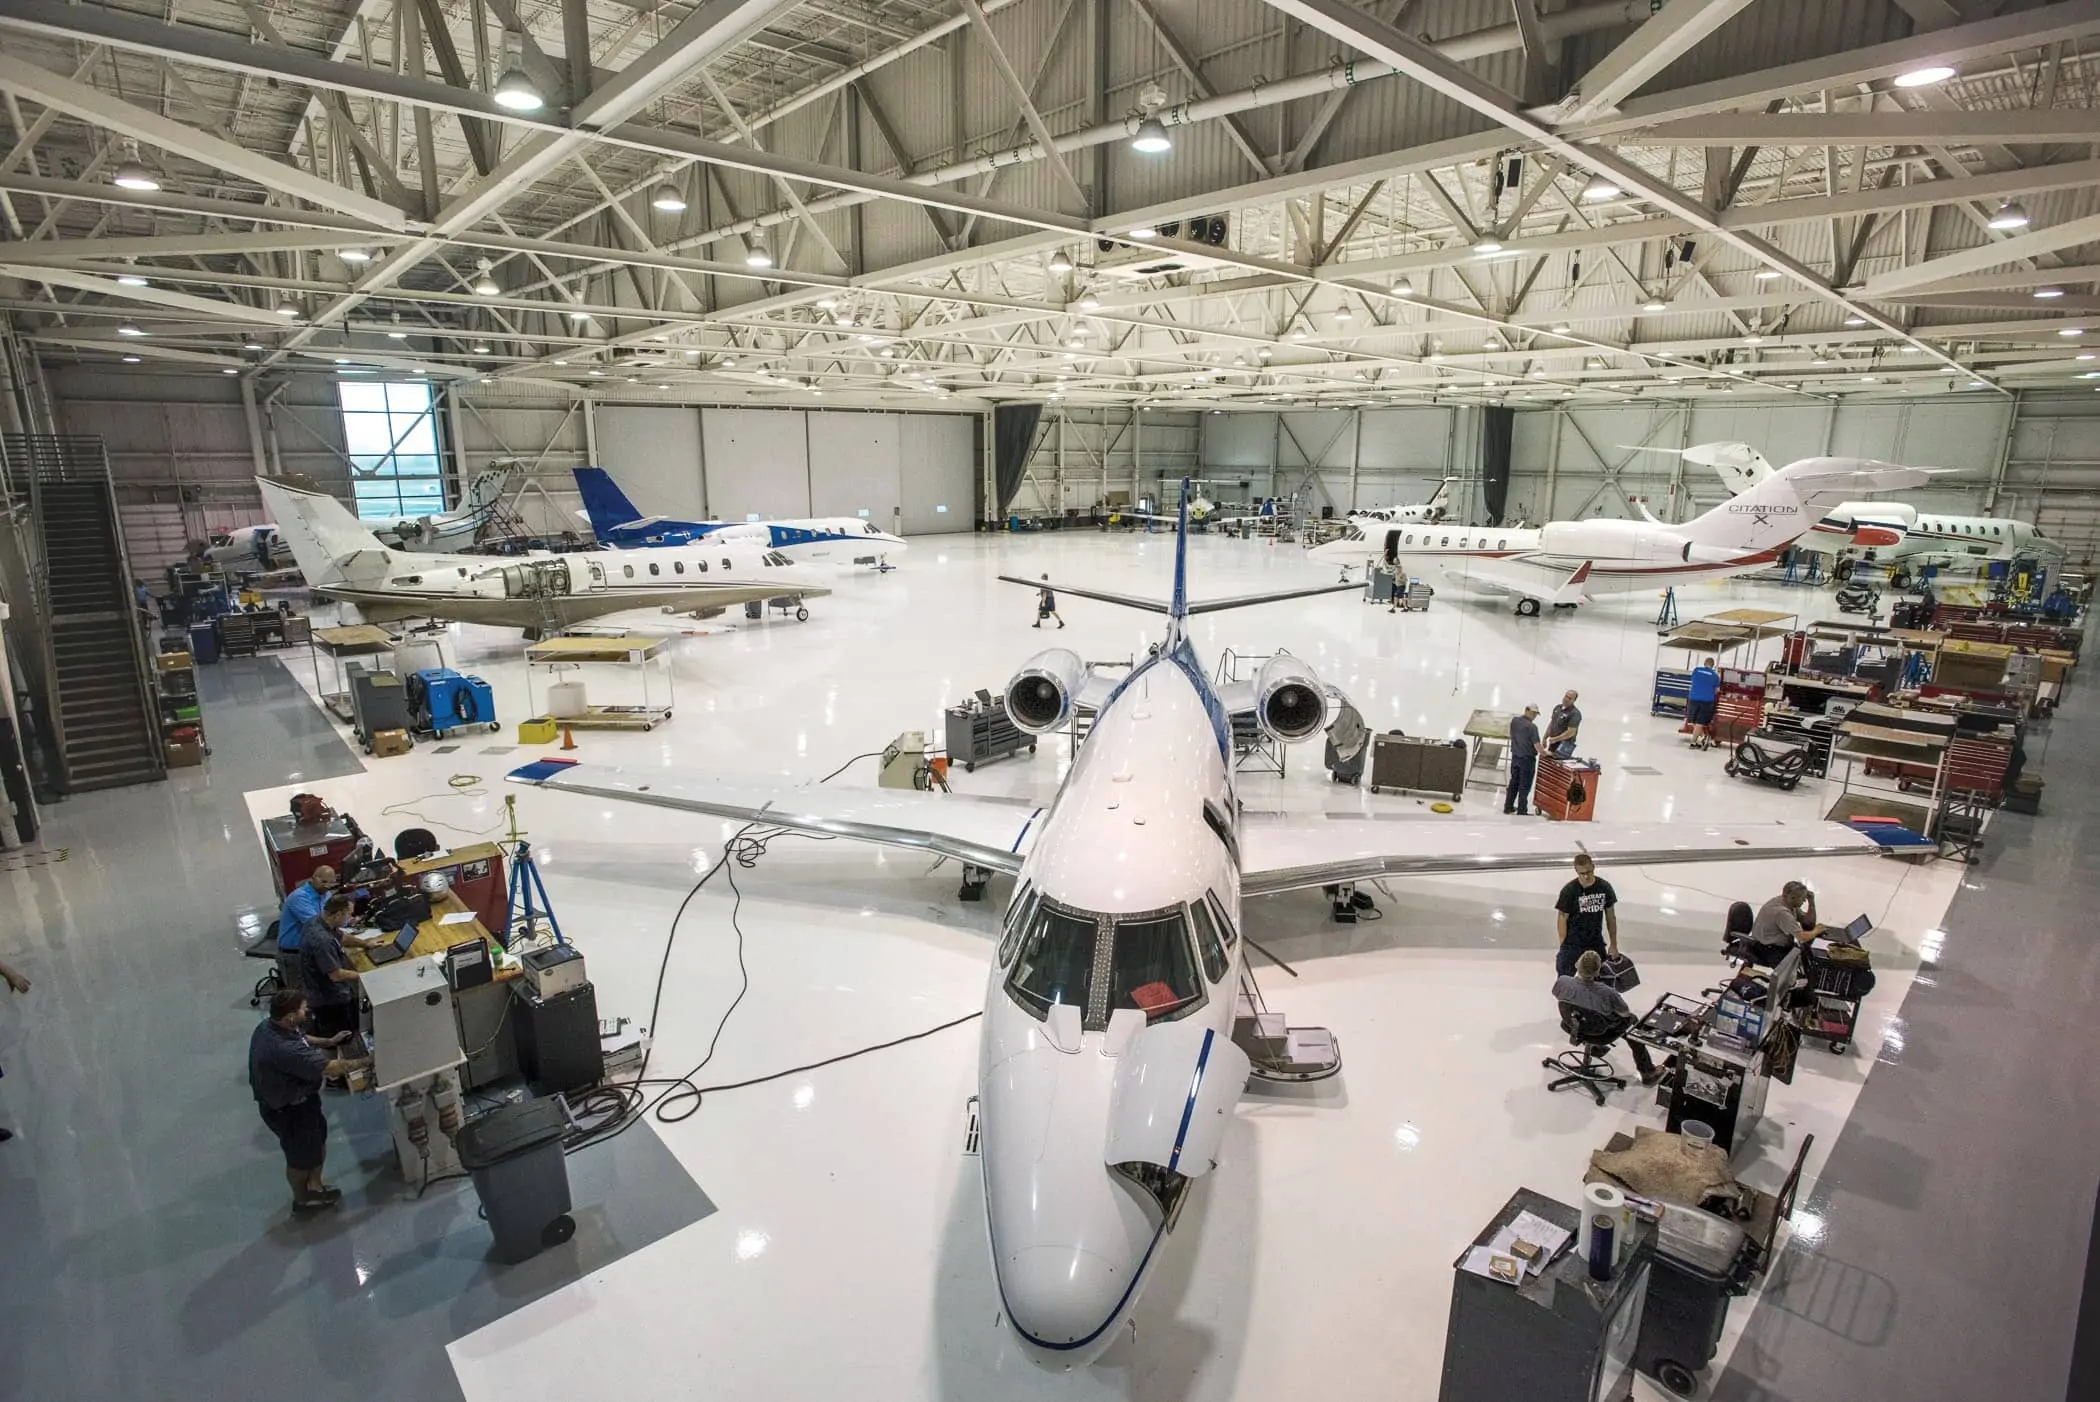 Cessna citation maintenance hanger - cost to fuel a private jet